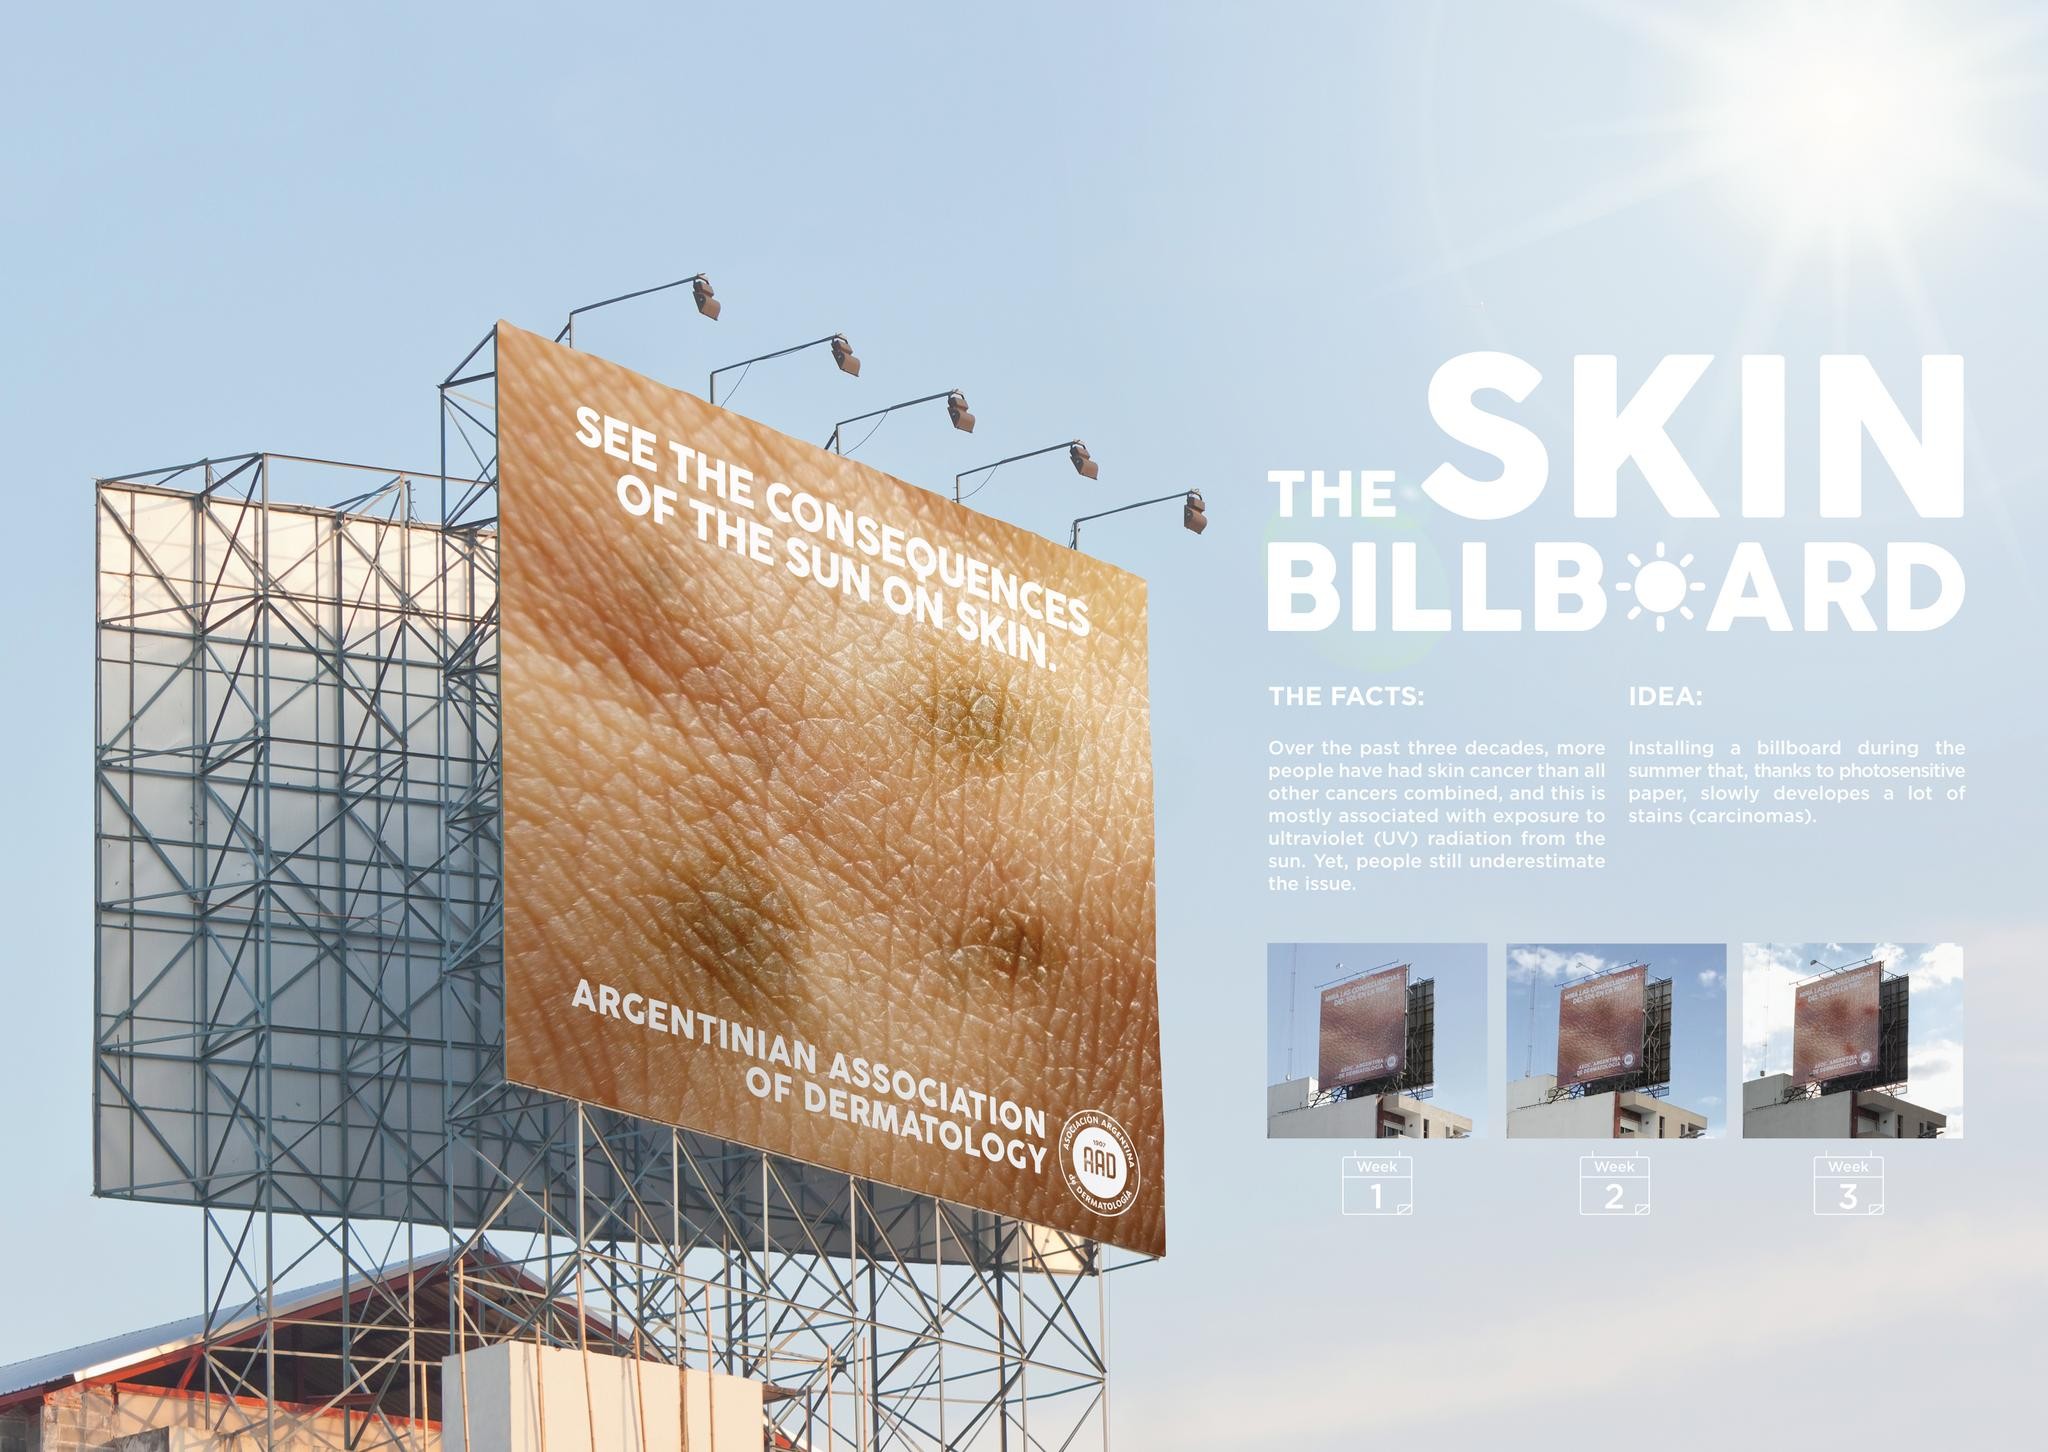 The Skin Billboard